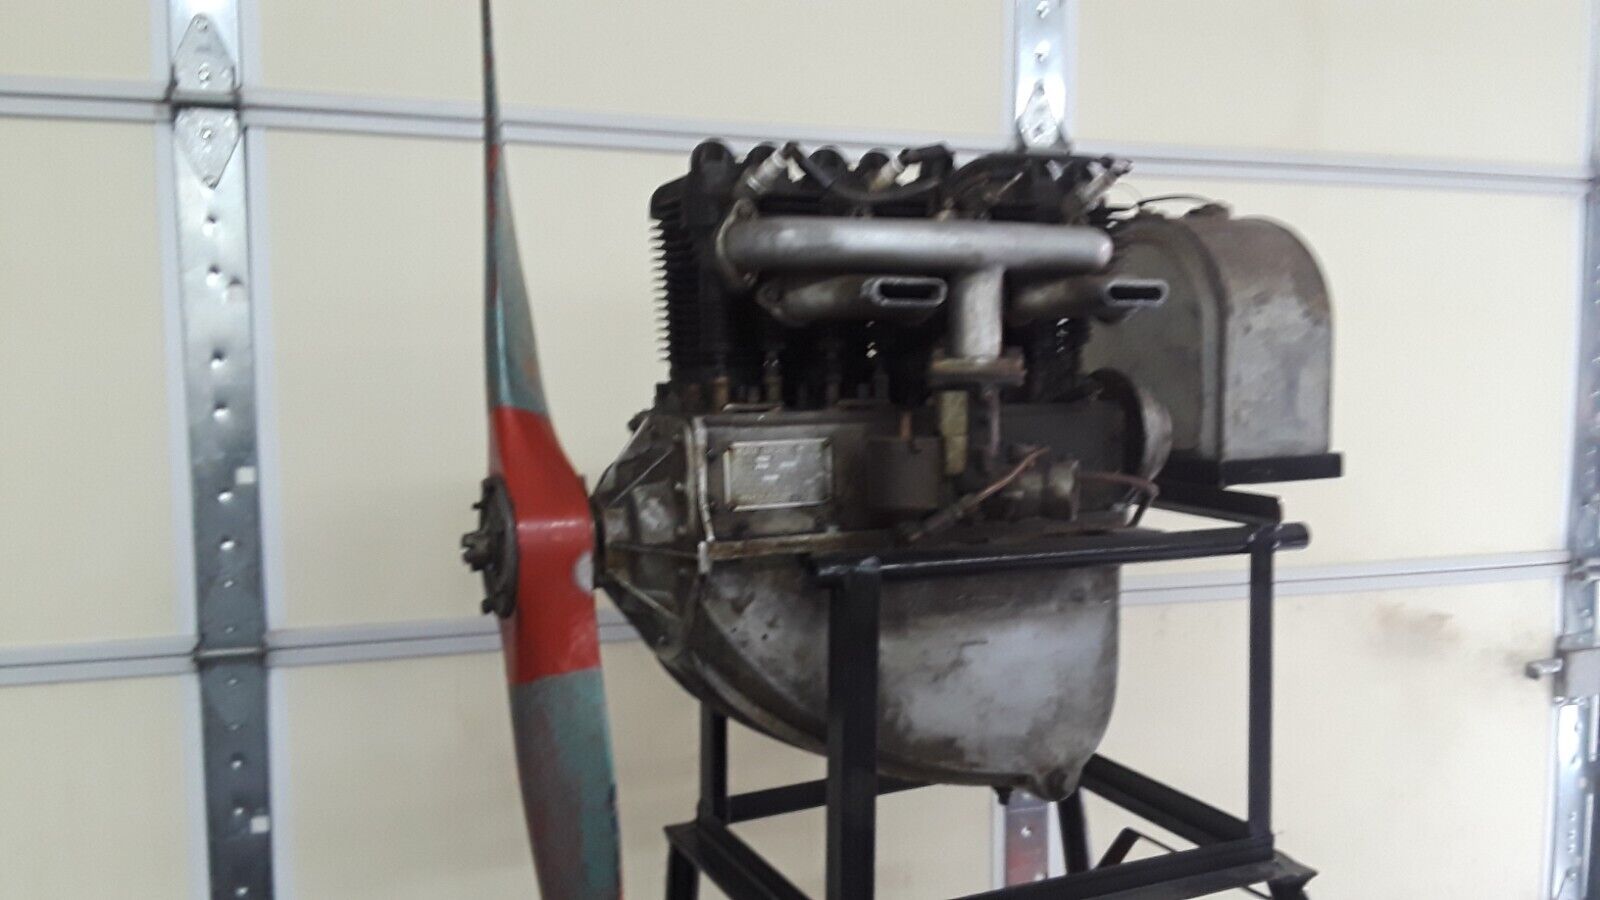 Antique Heath aircraft engine